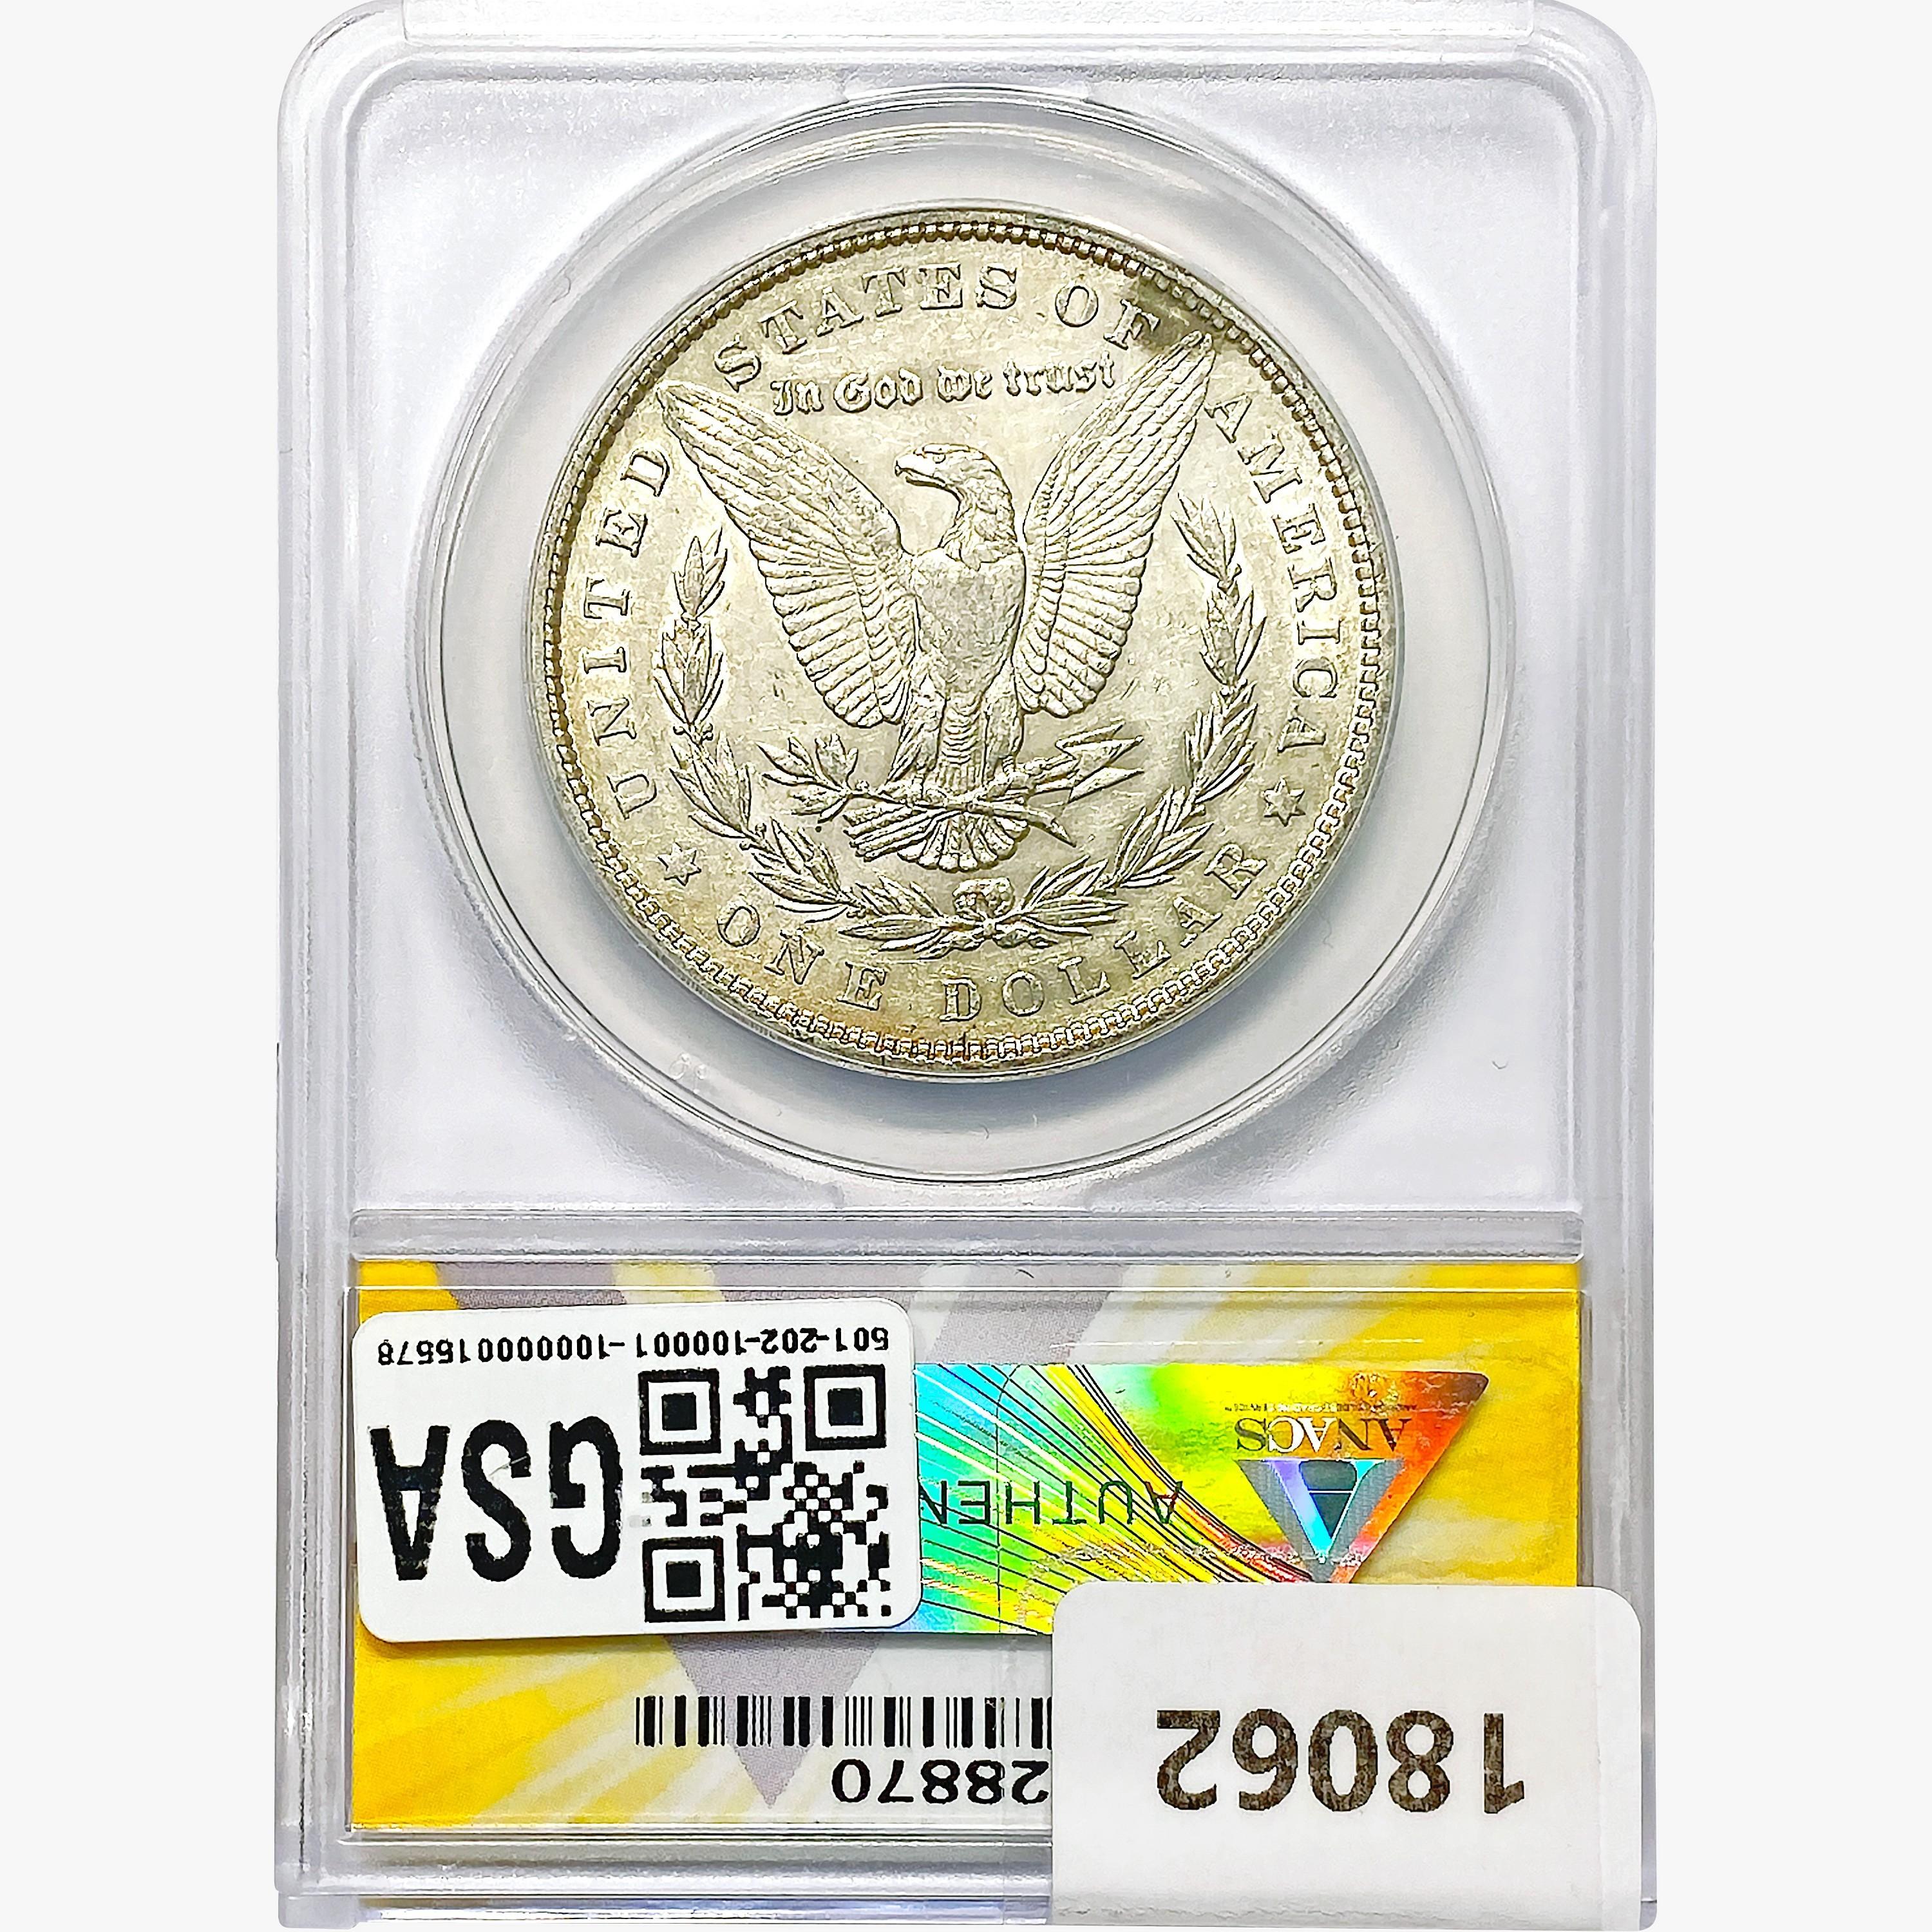 1878 Morgan Silver Dollar ANACS AU50 REV 79